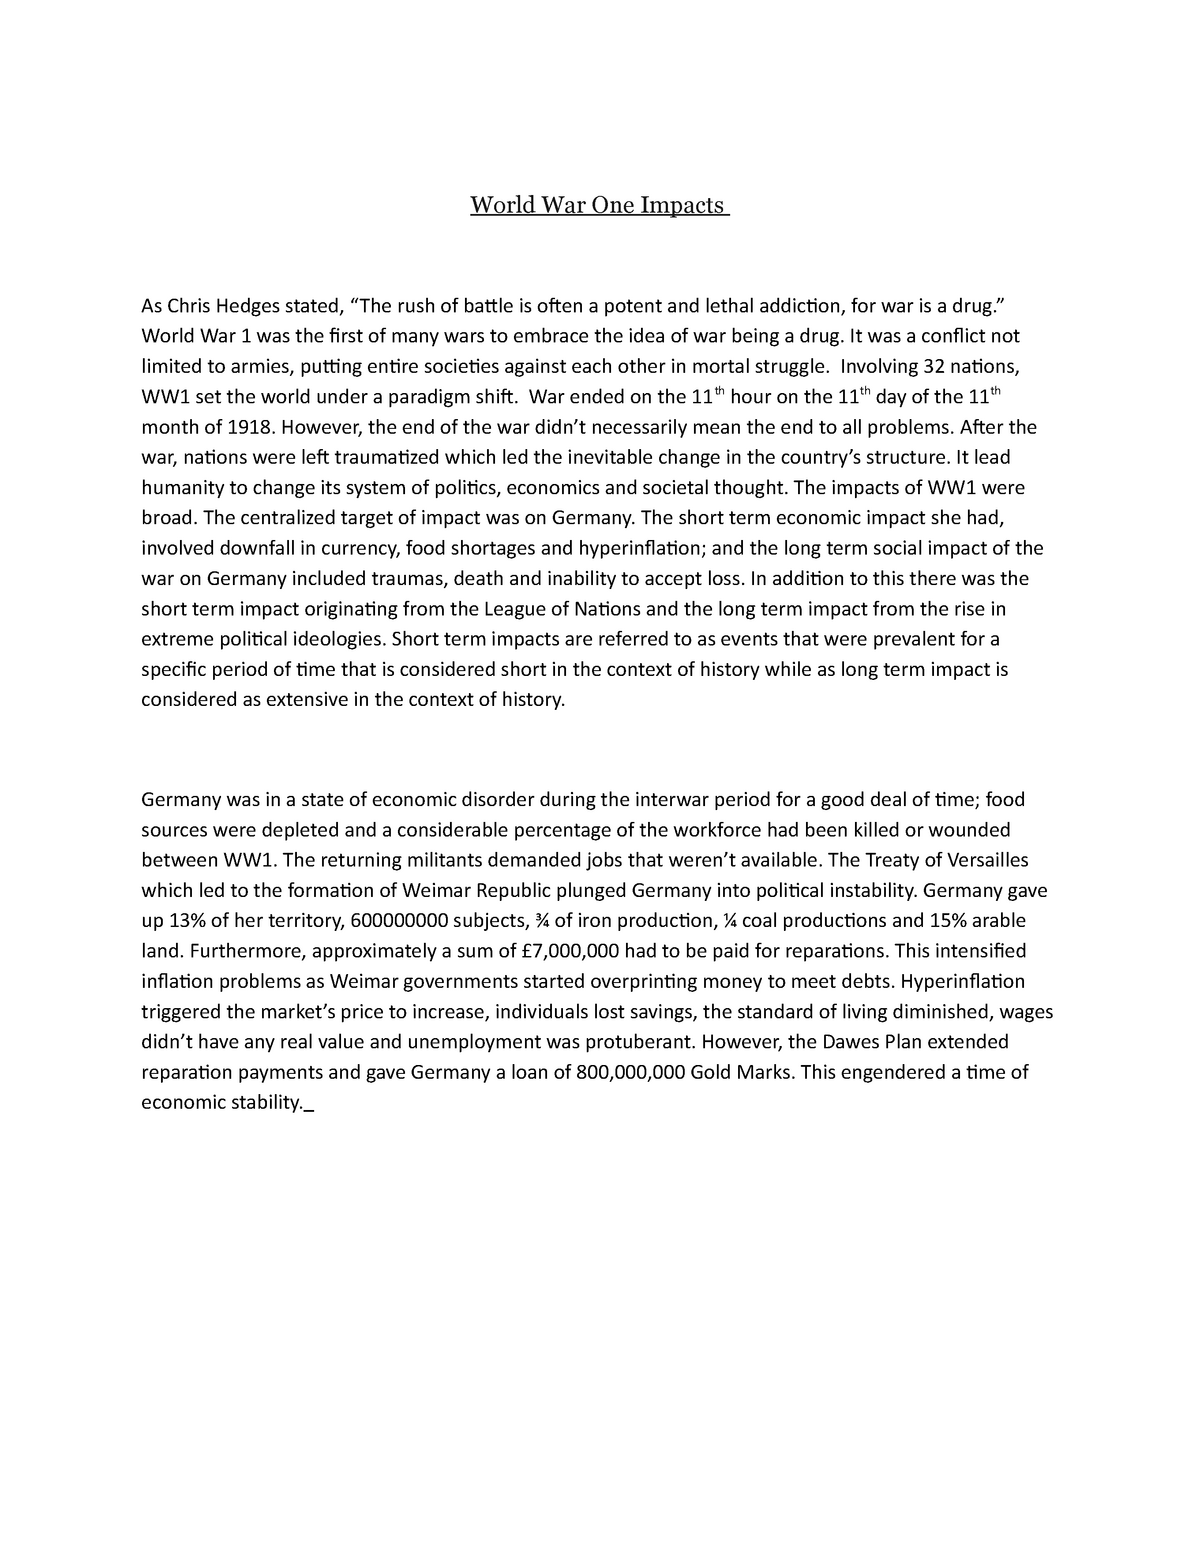 1 st world war essay